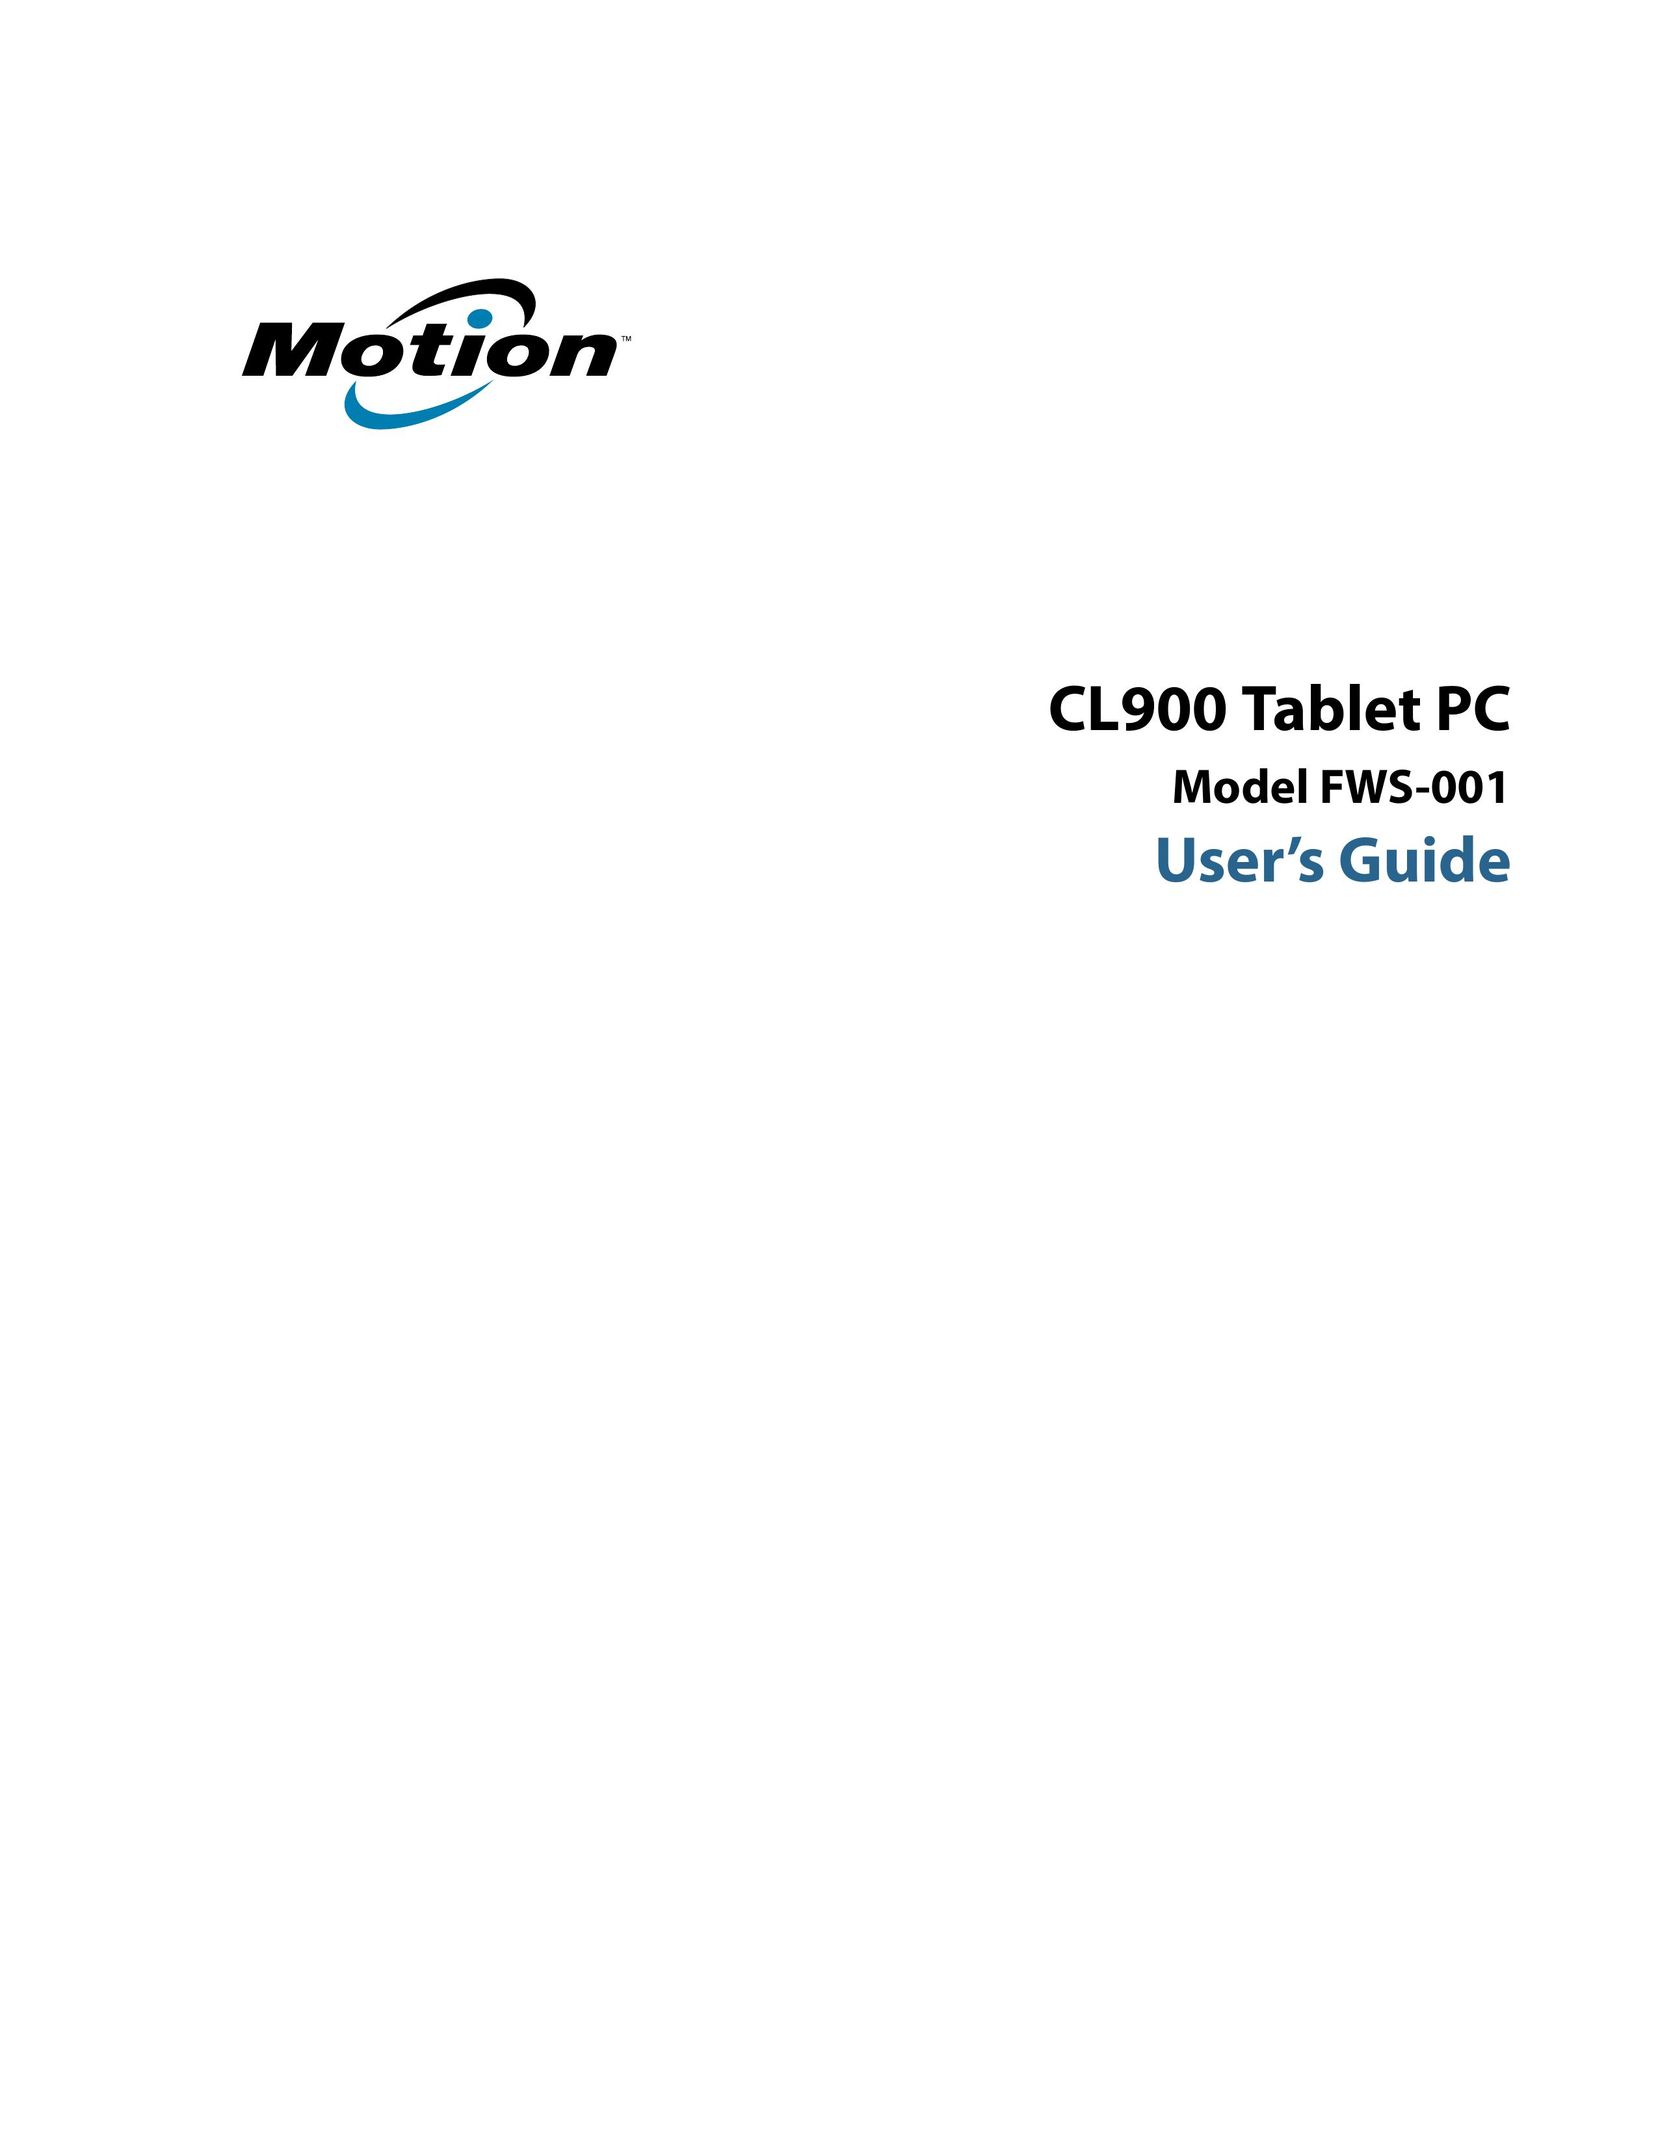 Motion FWS-001 Tablet User Manual